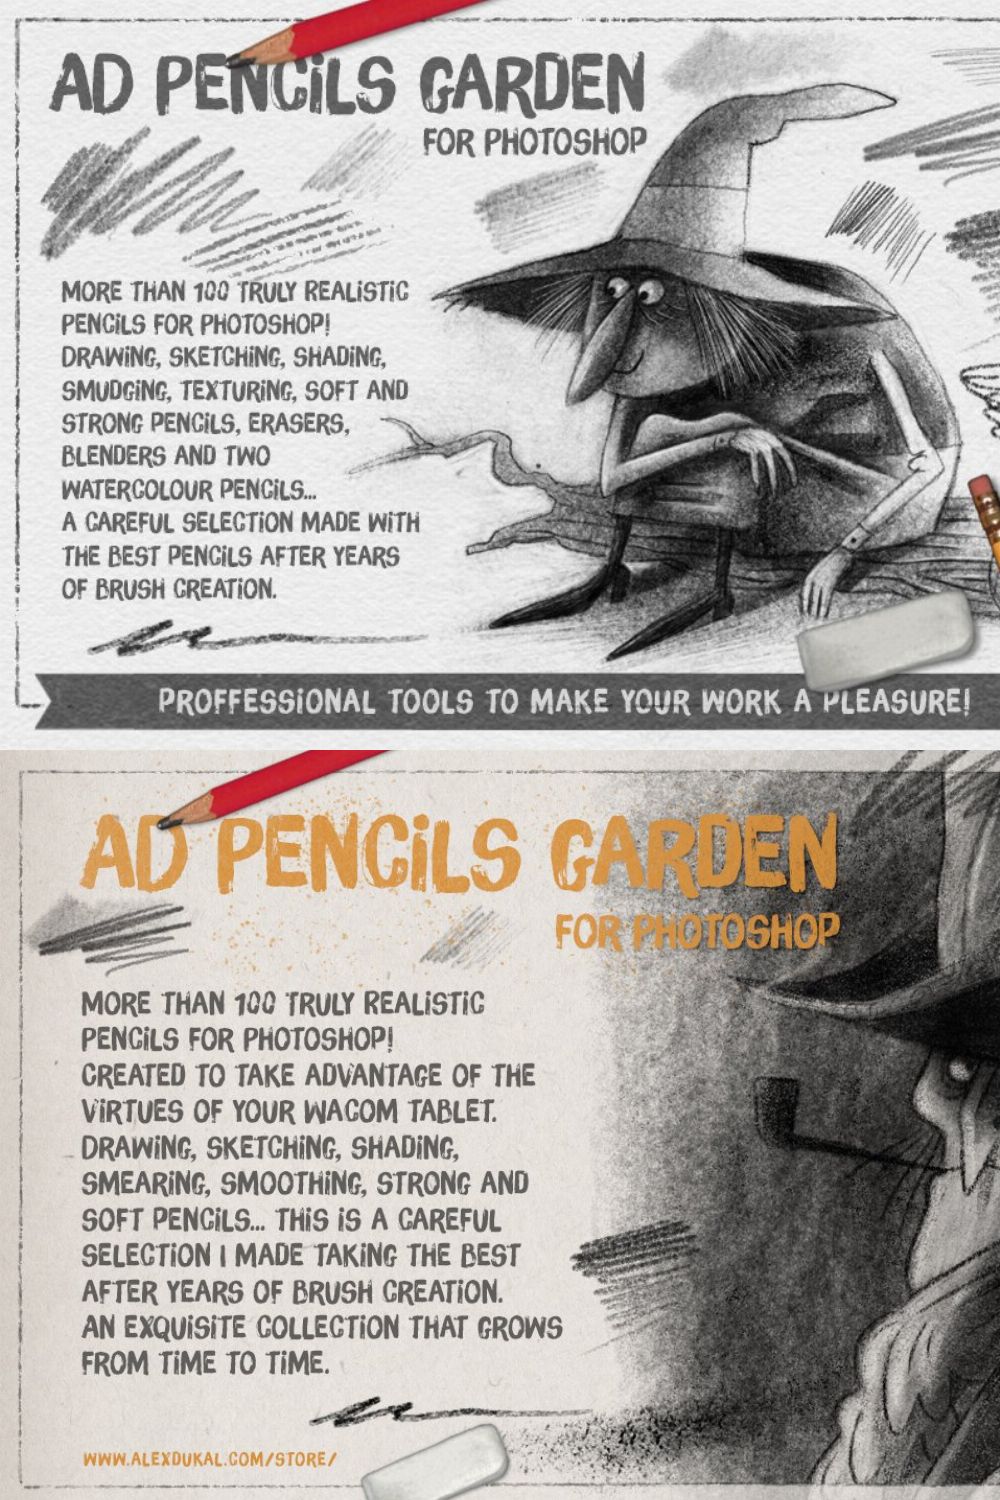 The Pencils Garden pinterest preview image.